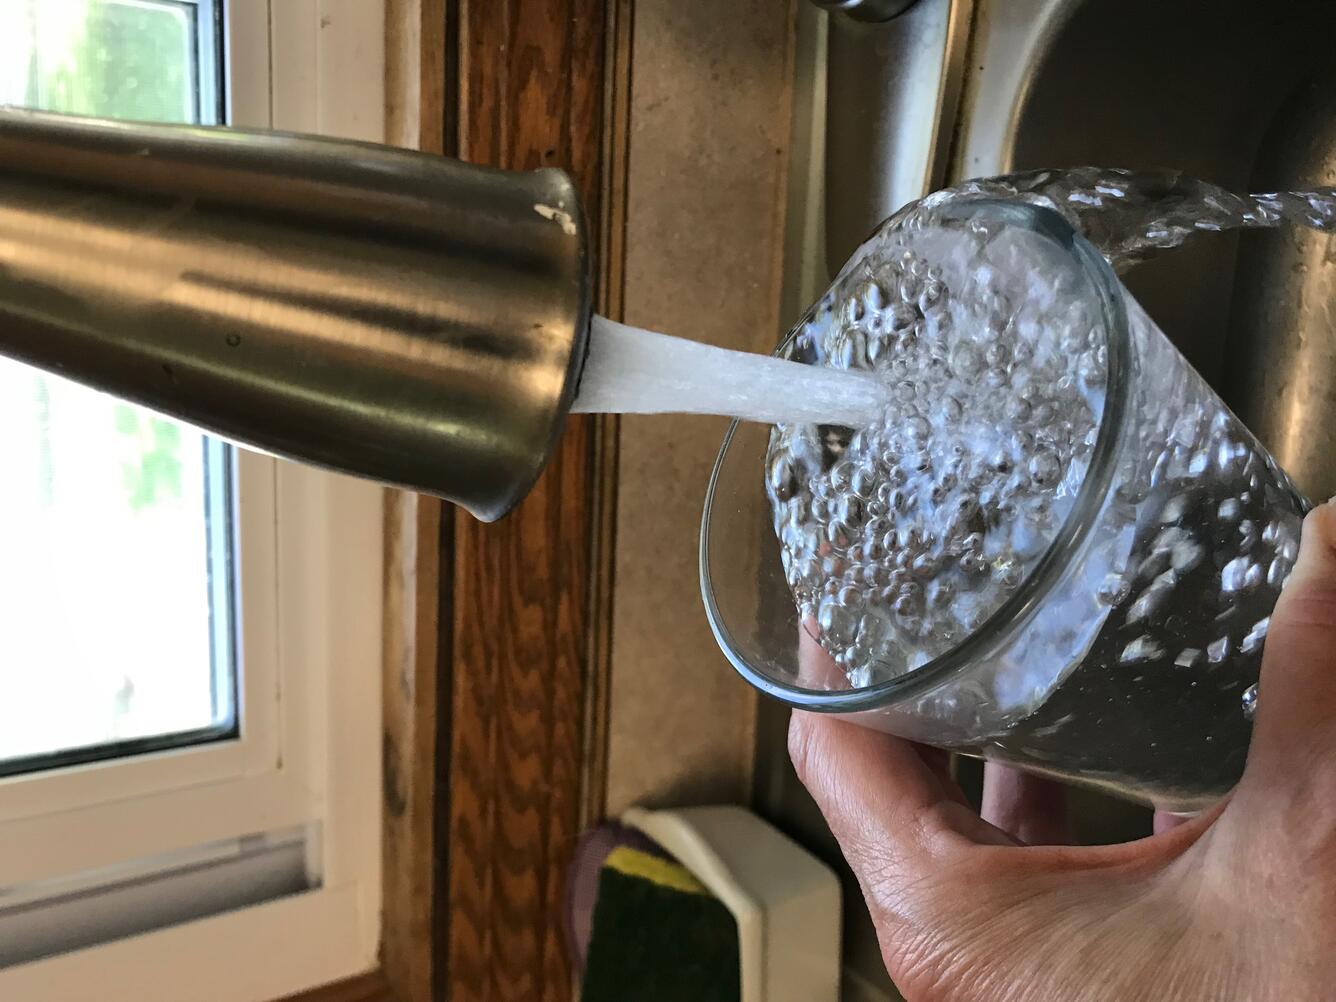 water glass filling in kitchen sink